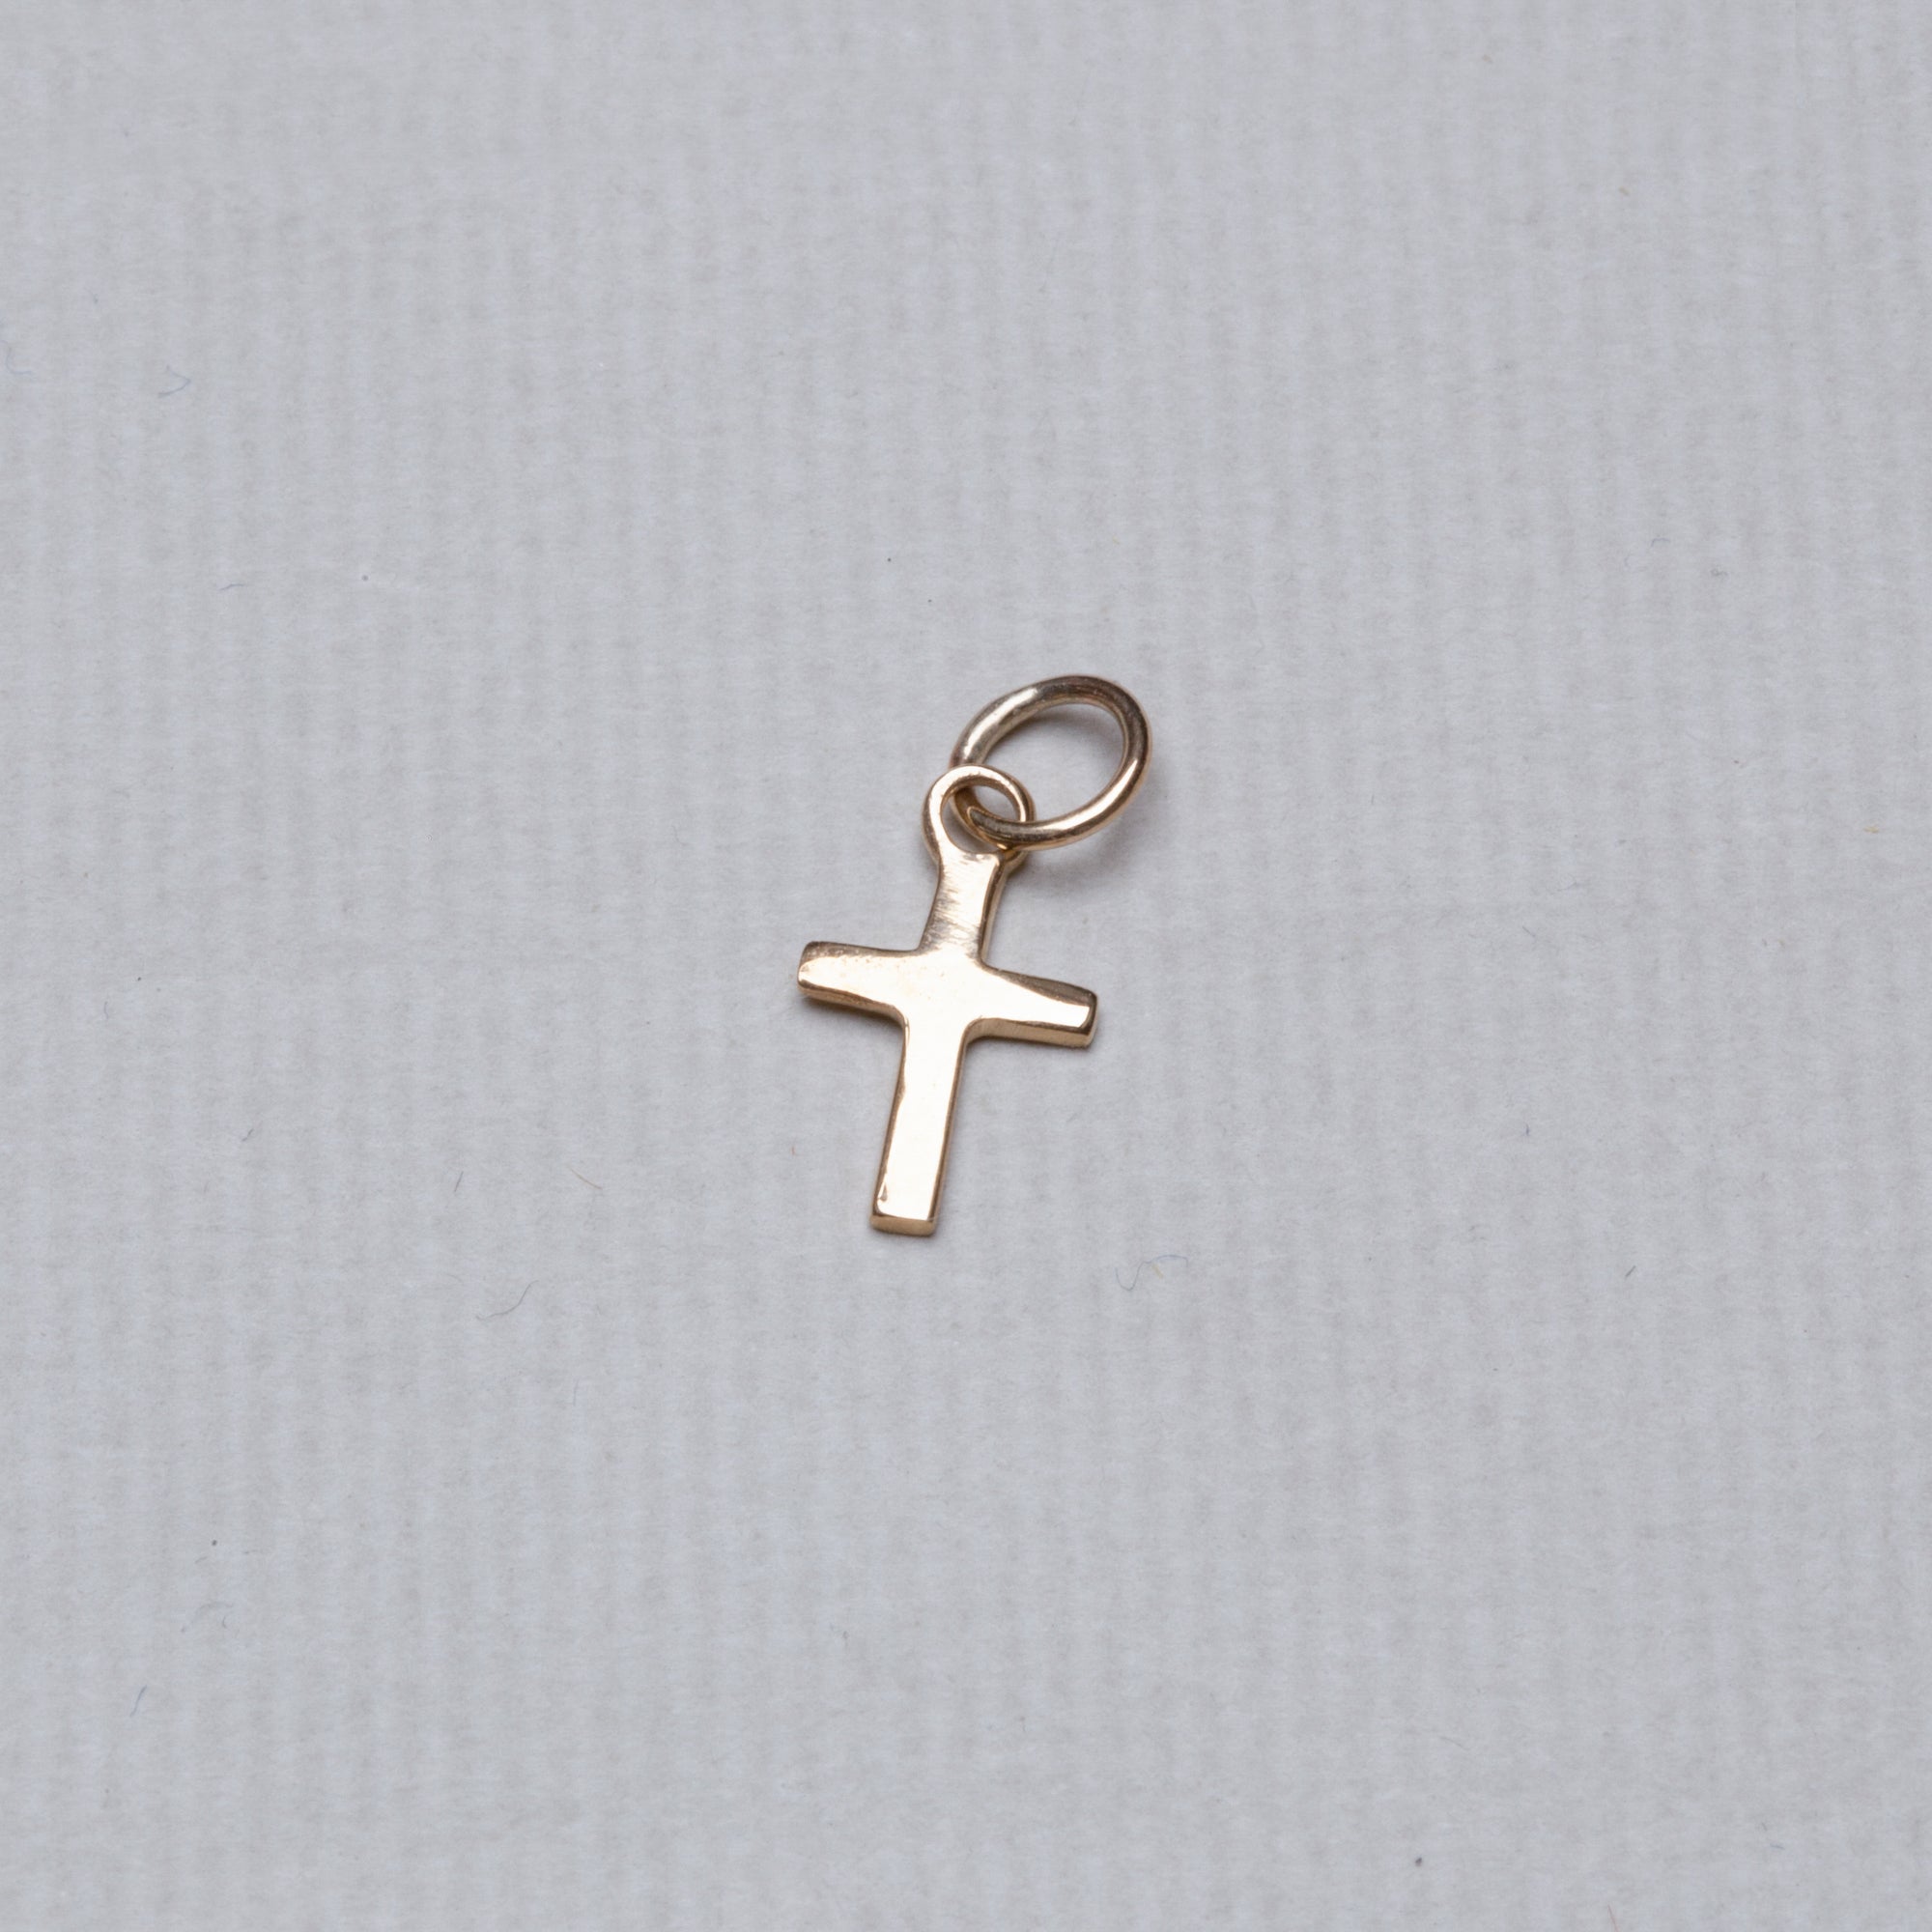 felt's very own design - adorable tiny cross pendant